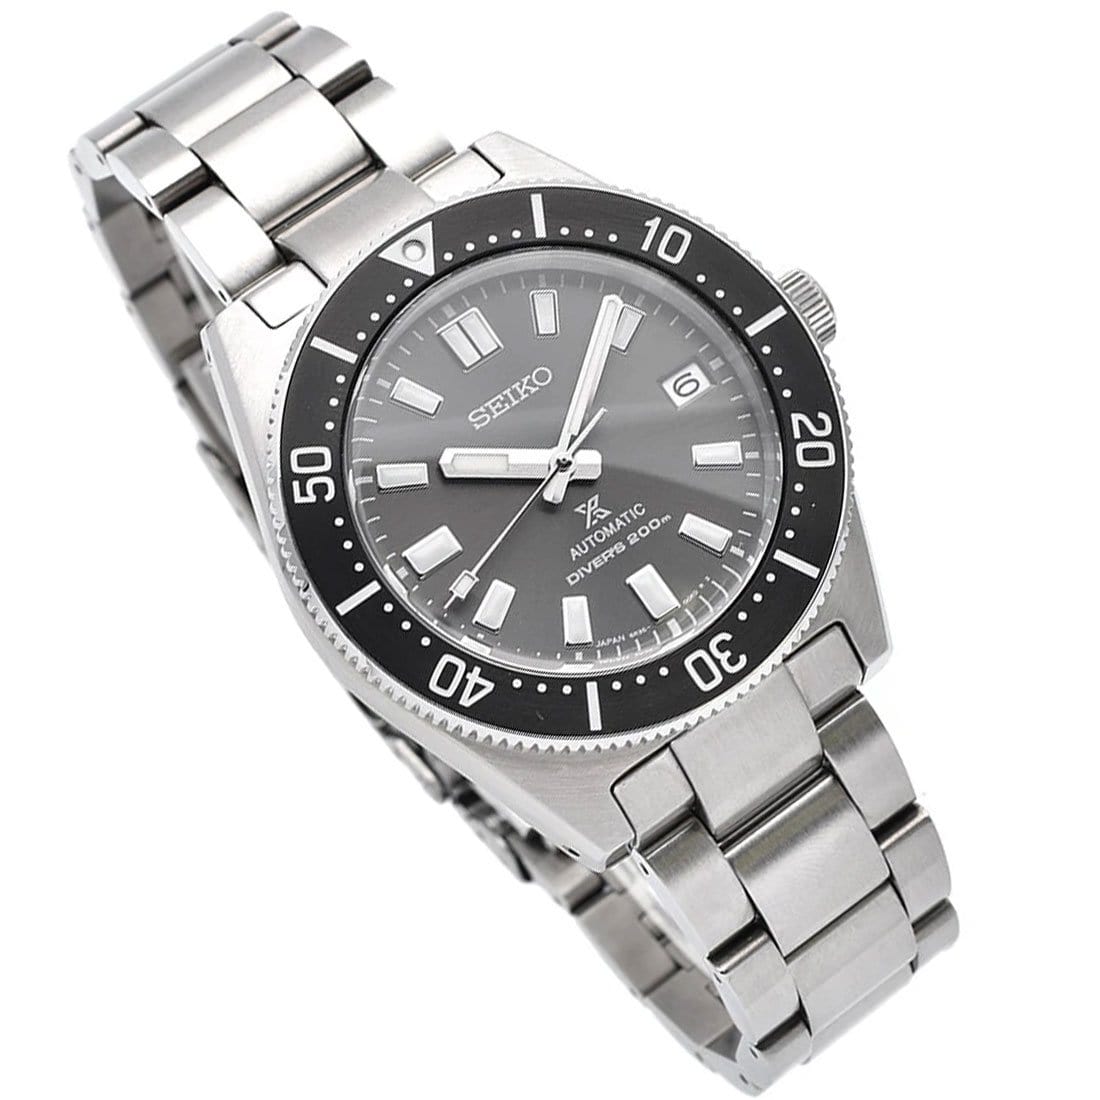 SBDC101 Seiko Prospex 55th Anniversary Automatic 1965 Divers JDM Watch